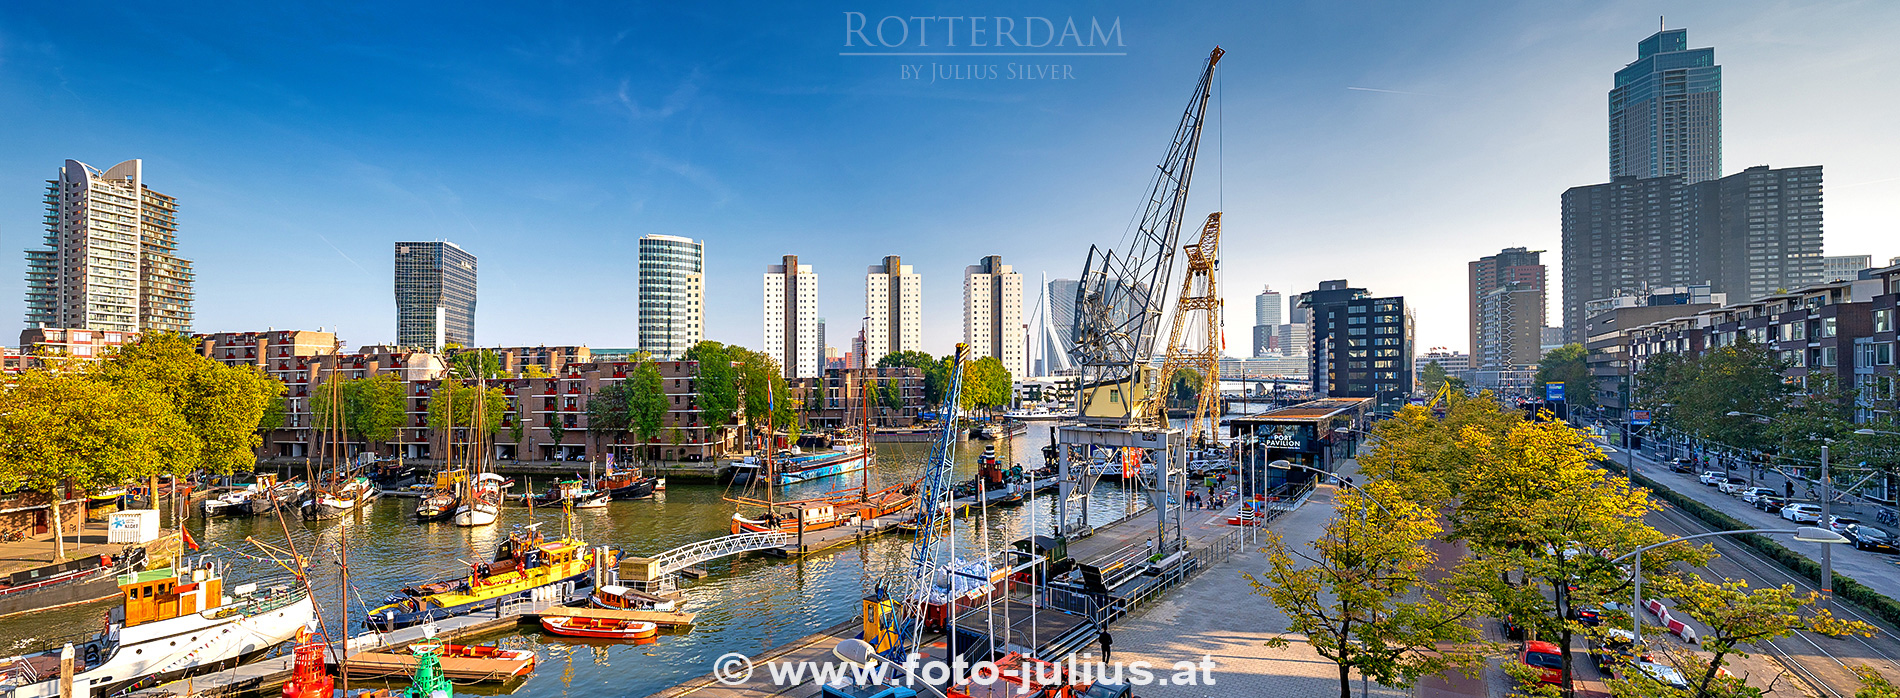 Rotterdam_039a.jpg, 1,8MB